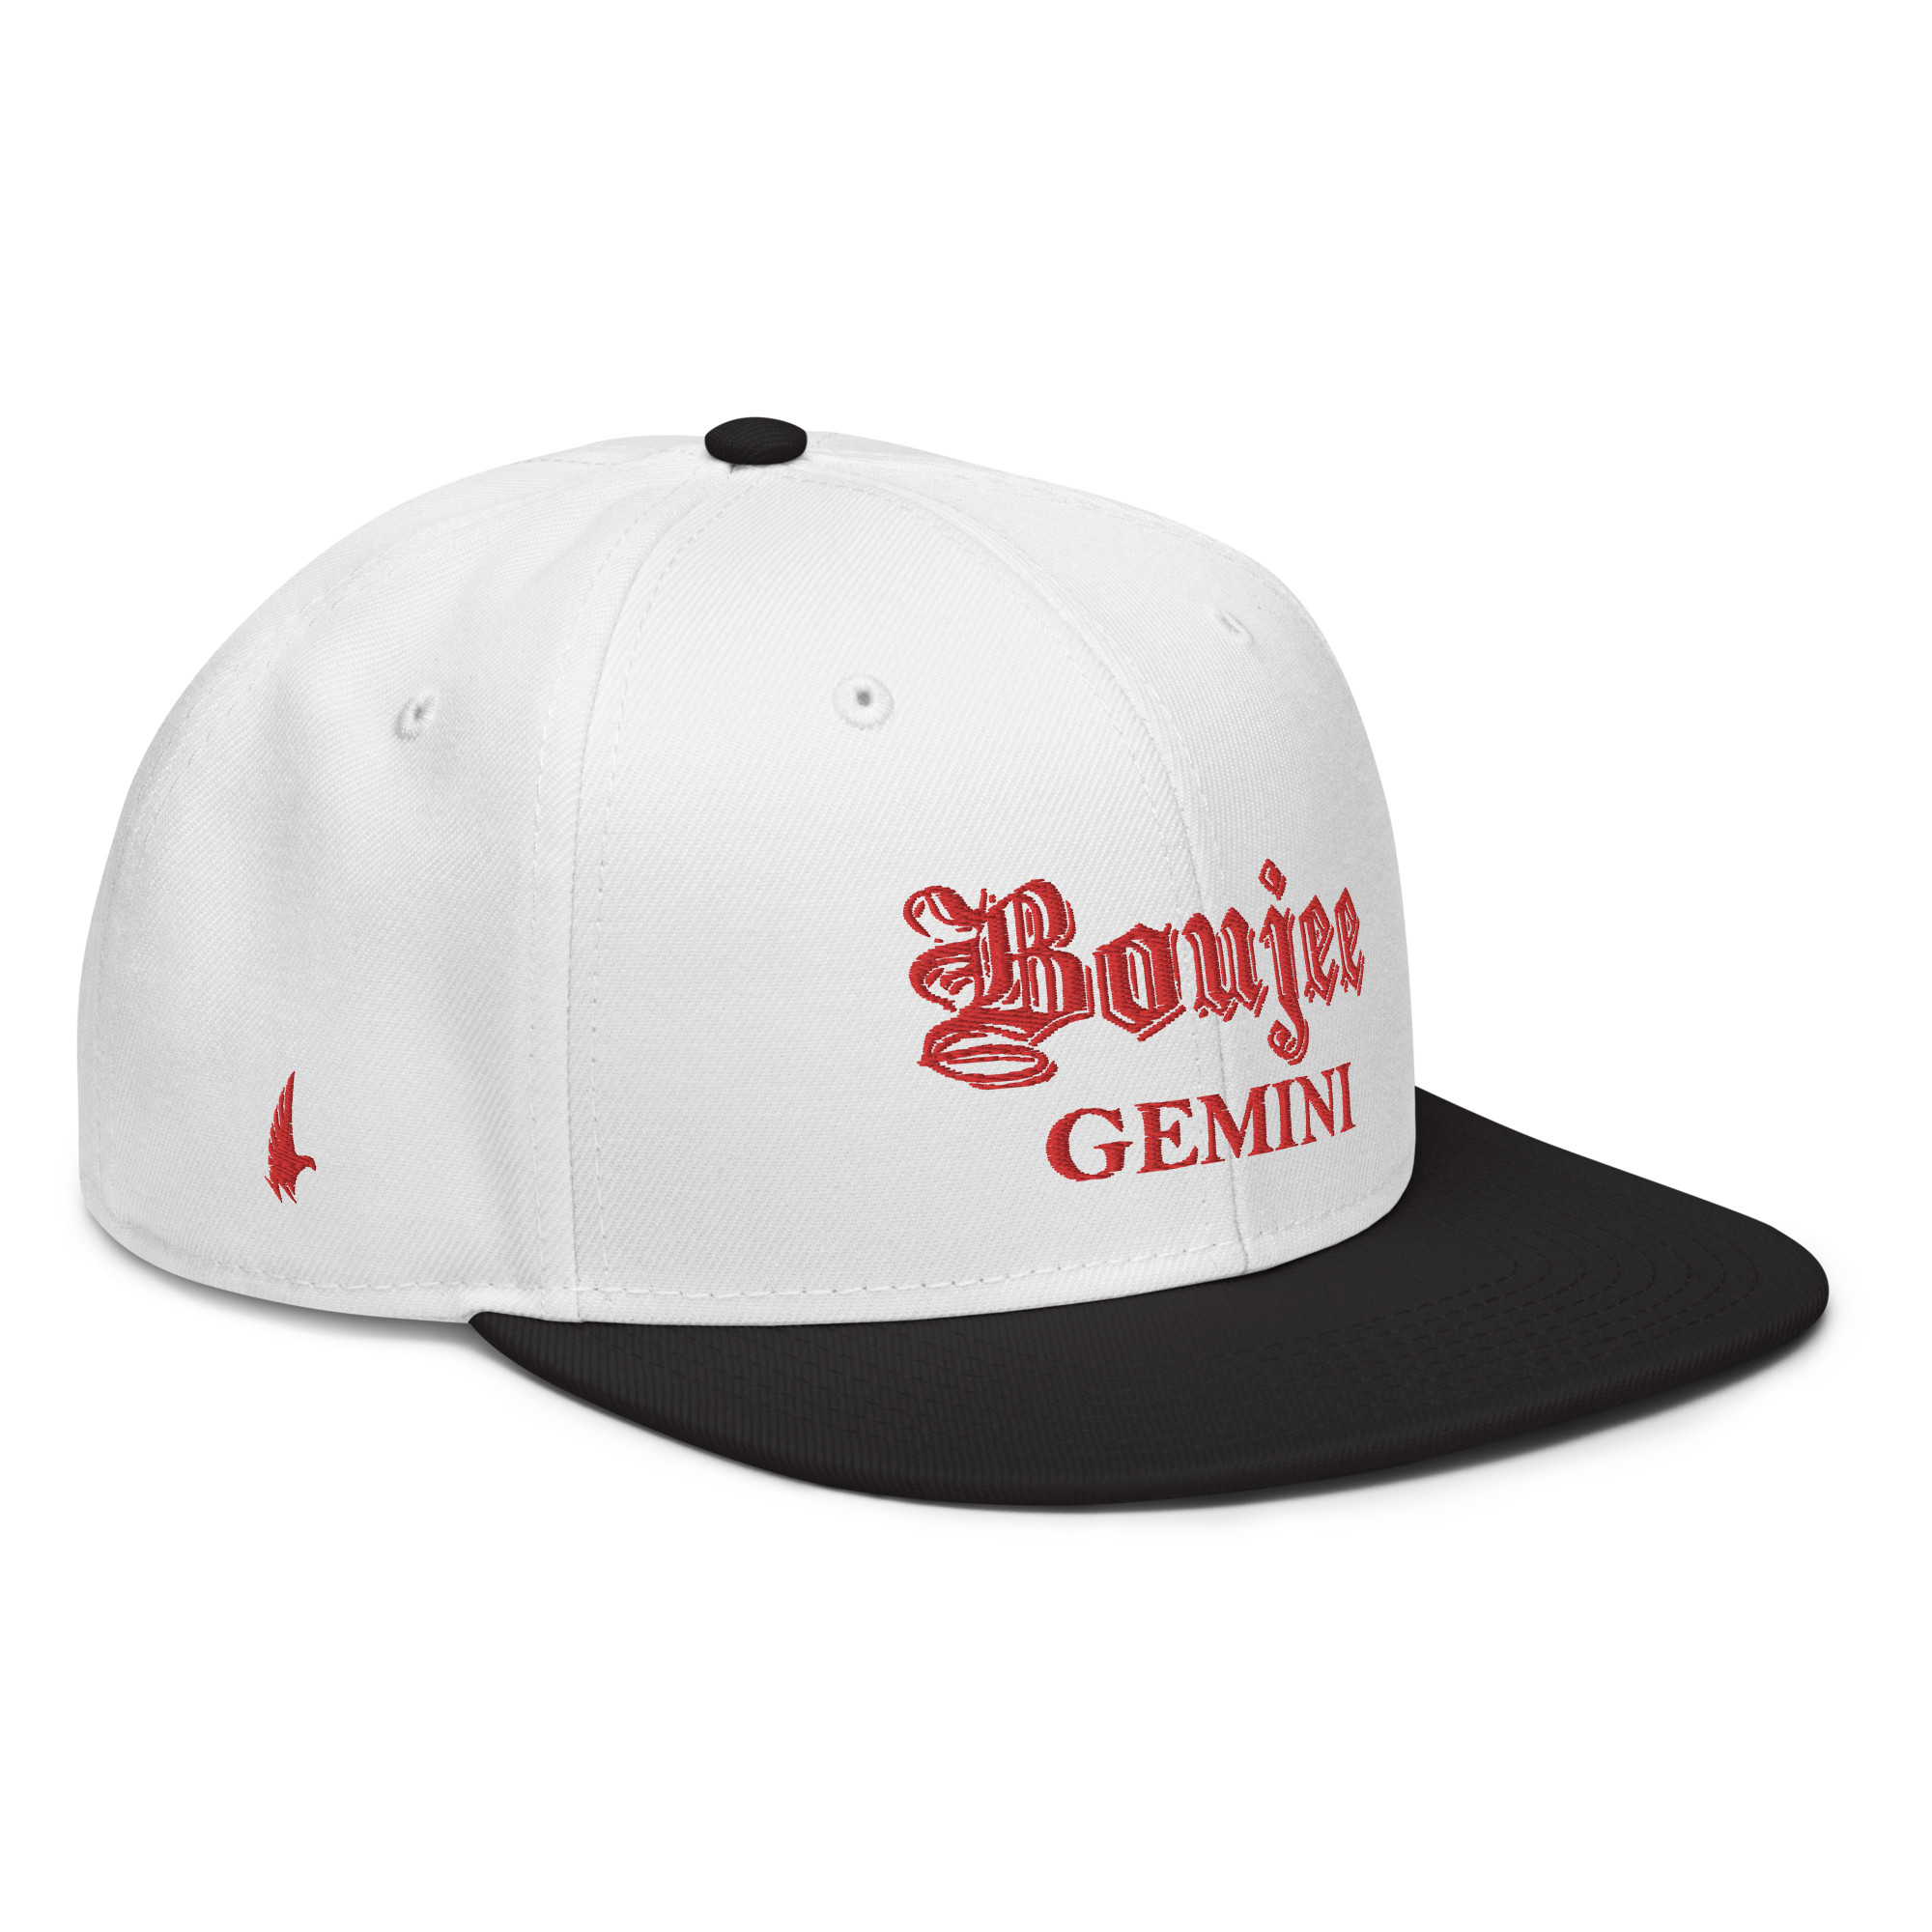 Boujee Gemini Snapback Hat - White/Red/Black - Loyalty Vibes